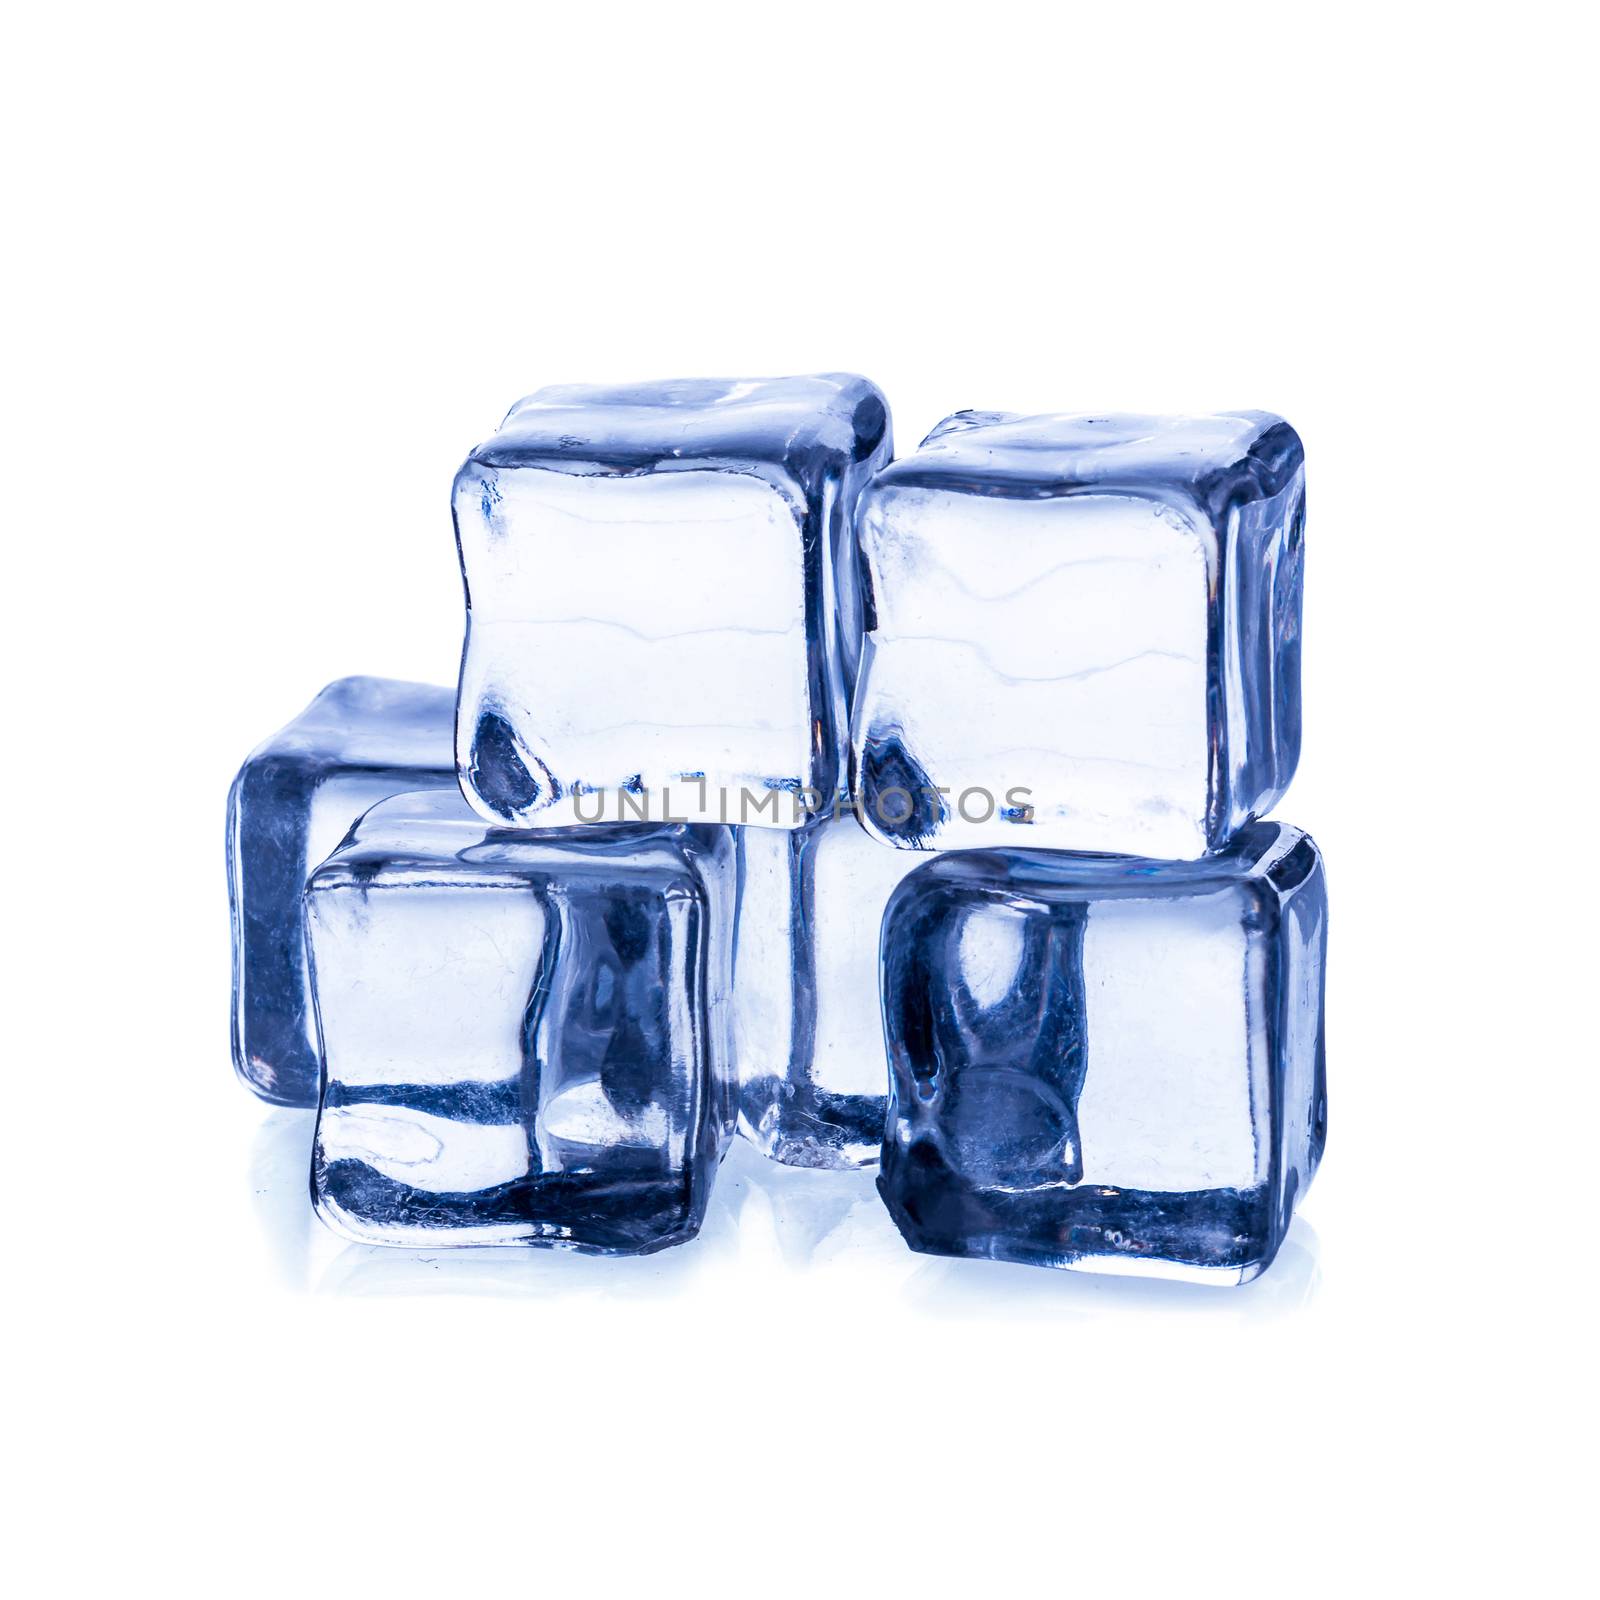 Melting ice cubes isolated on white background. by kaiskynet